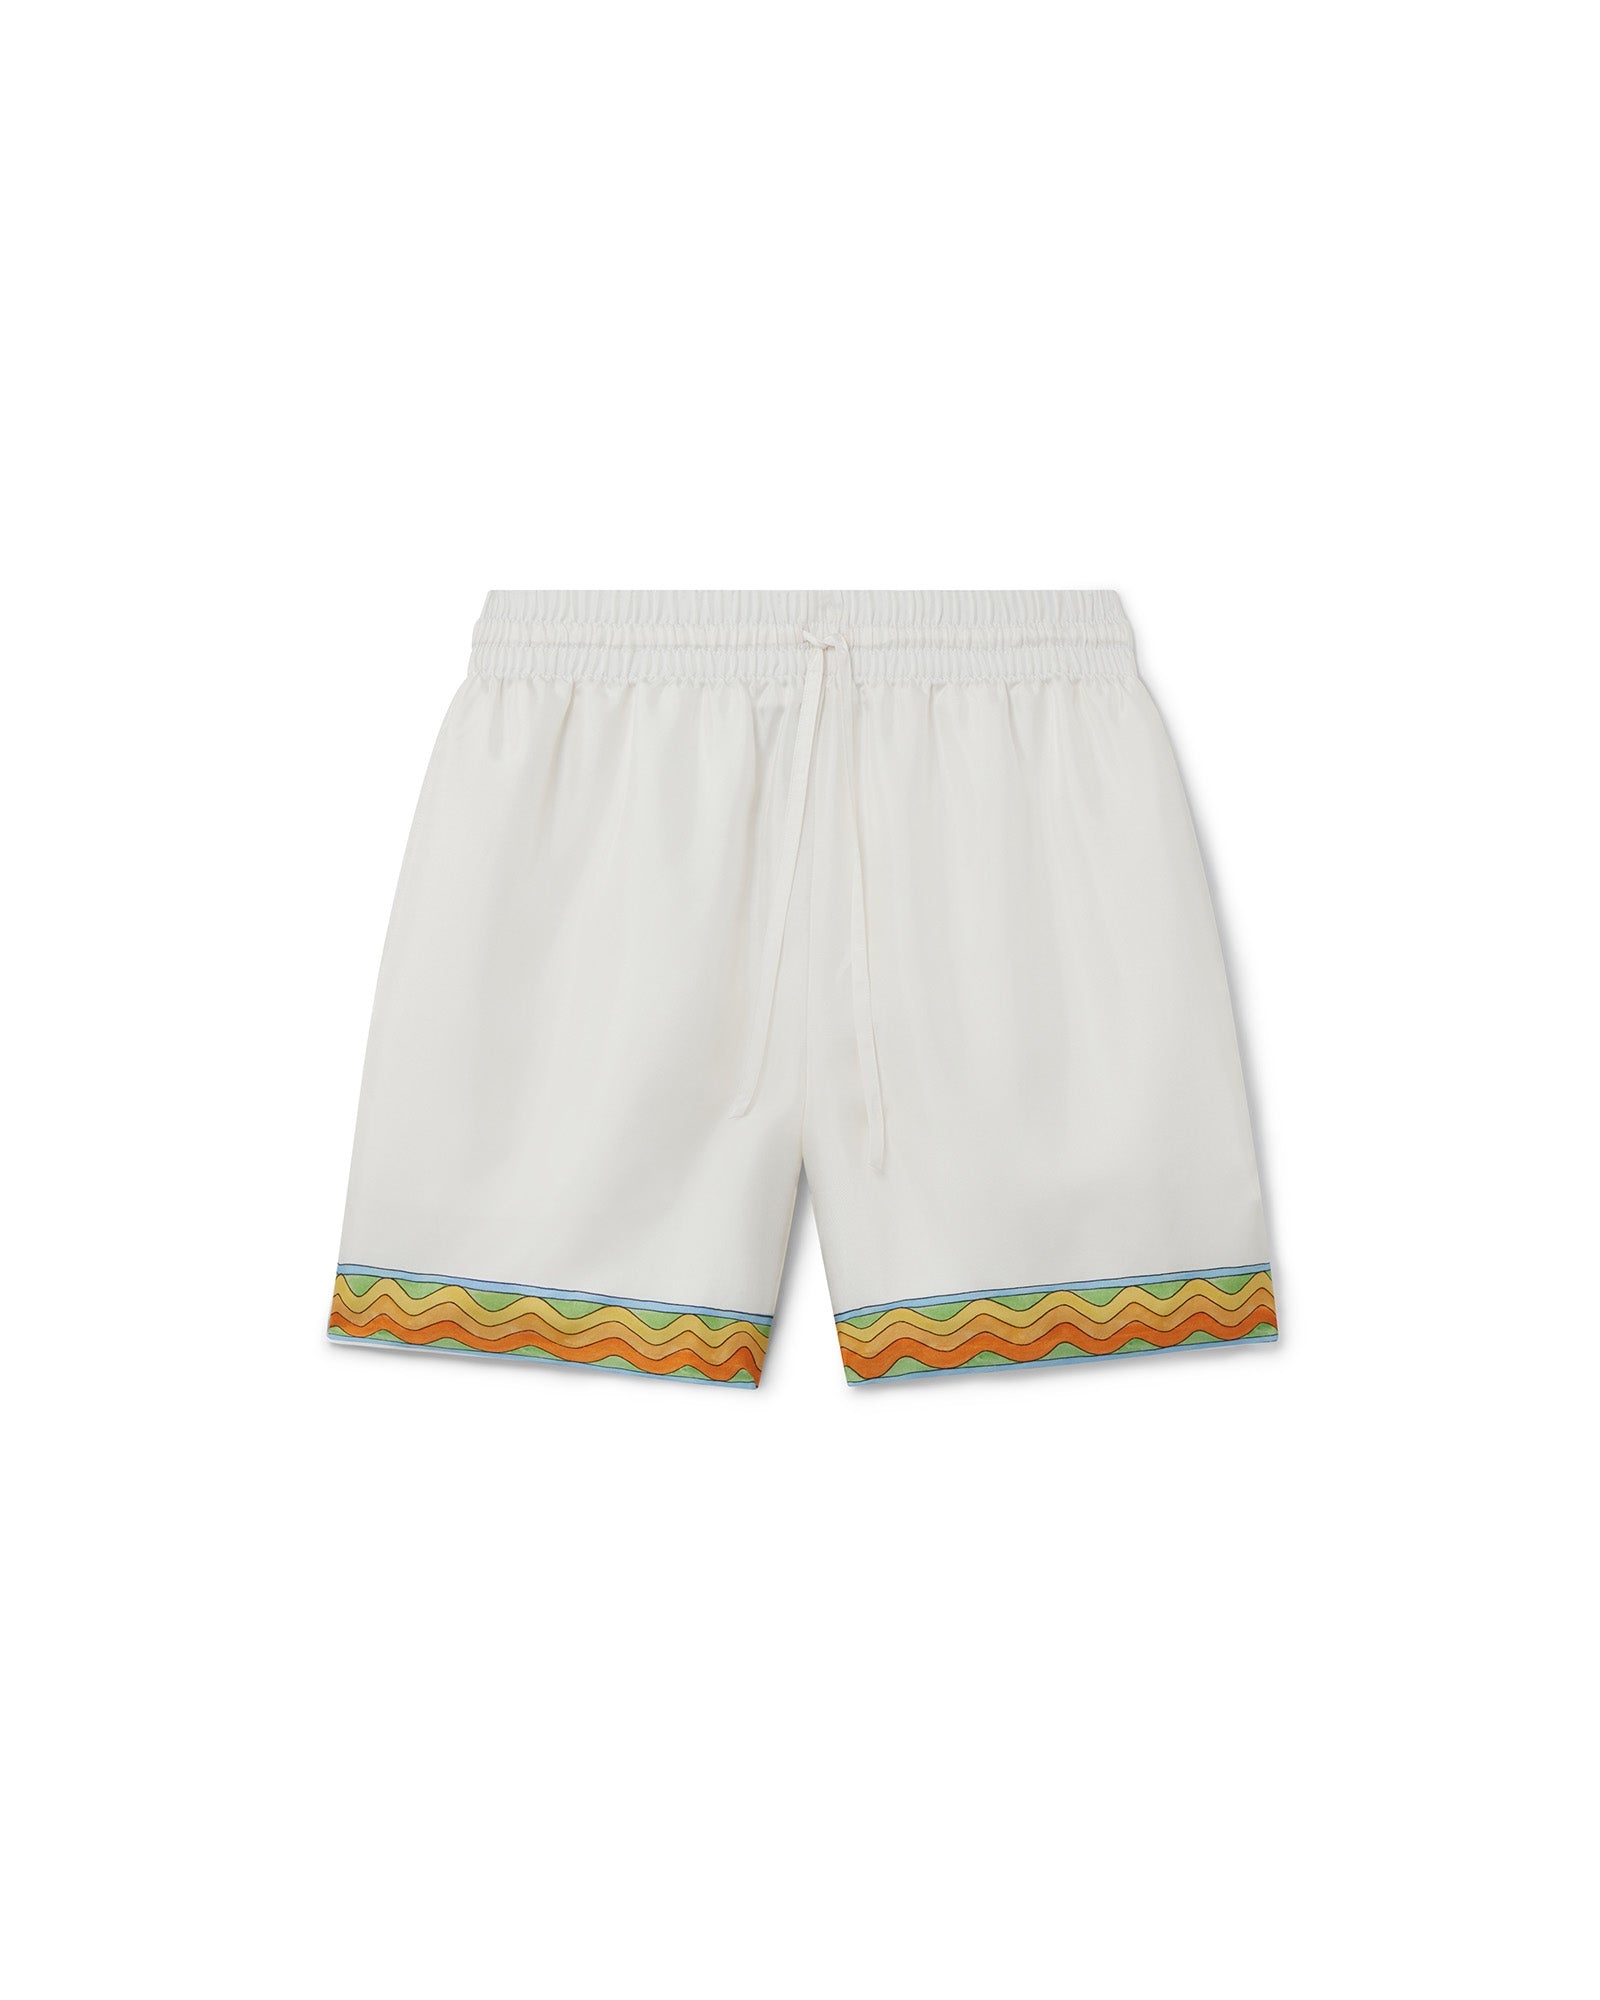 Afro Cubism Tennis Club Silk Shorts - 1